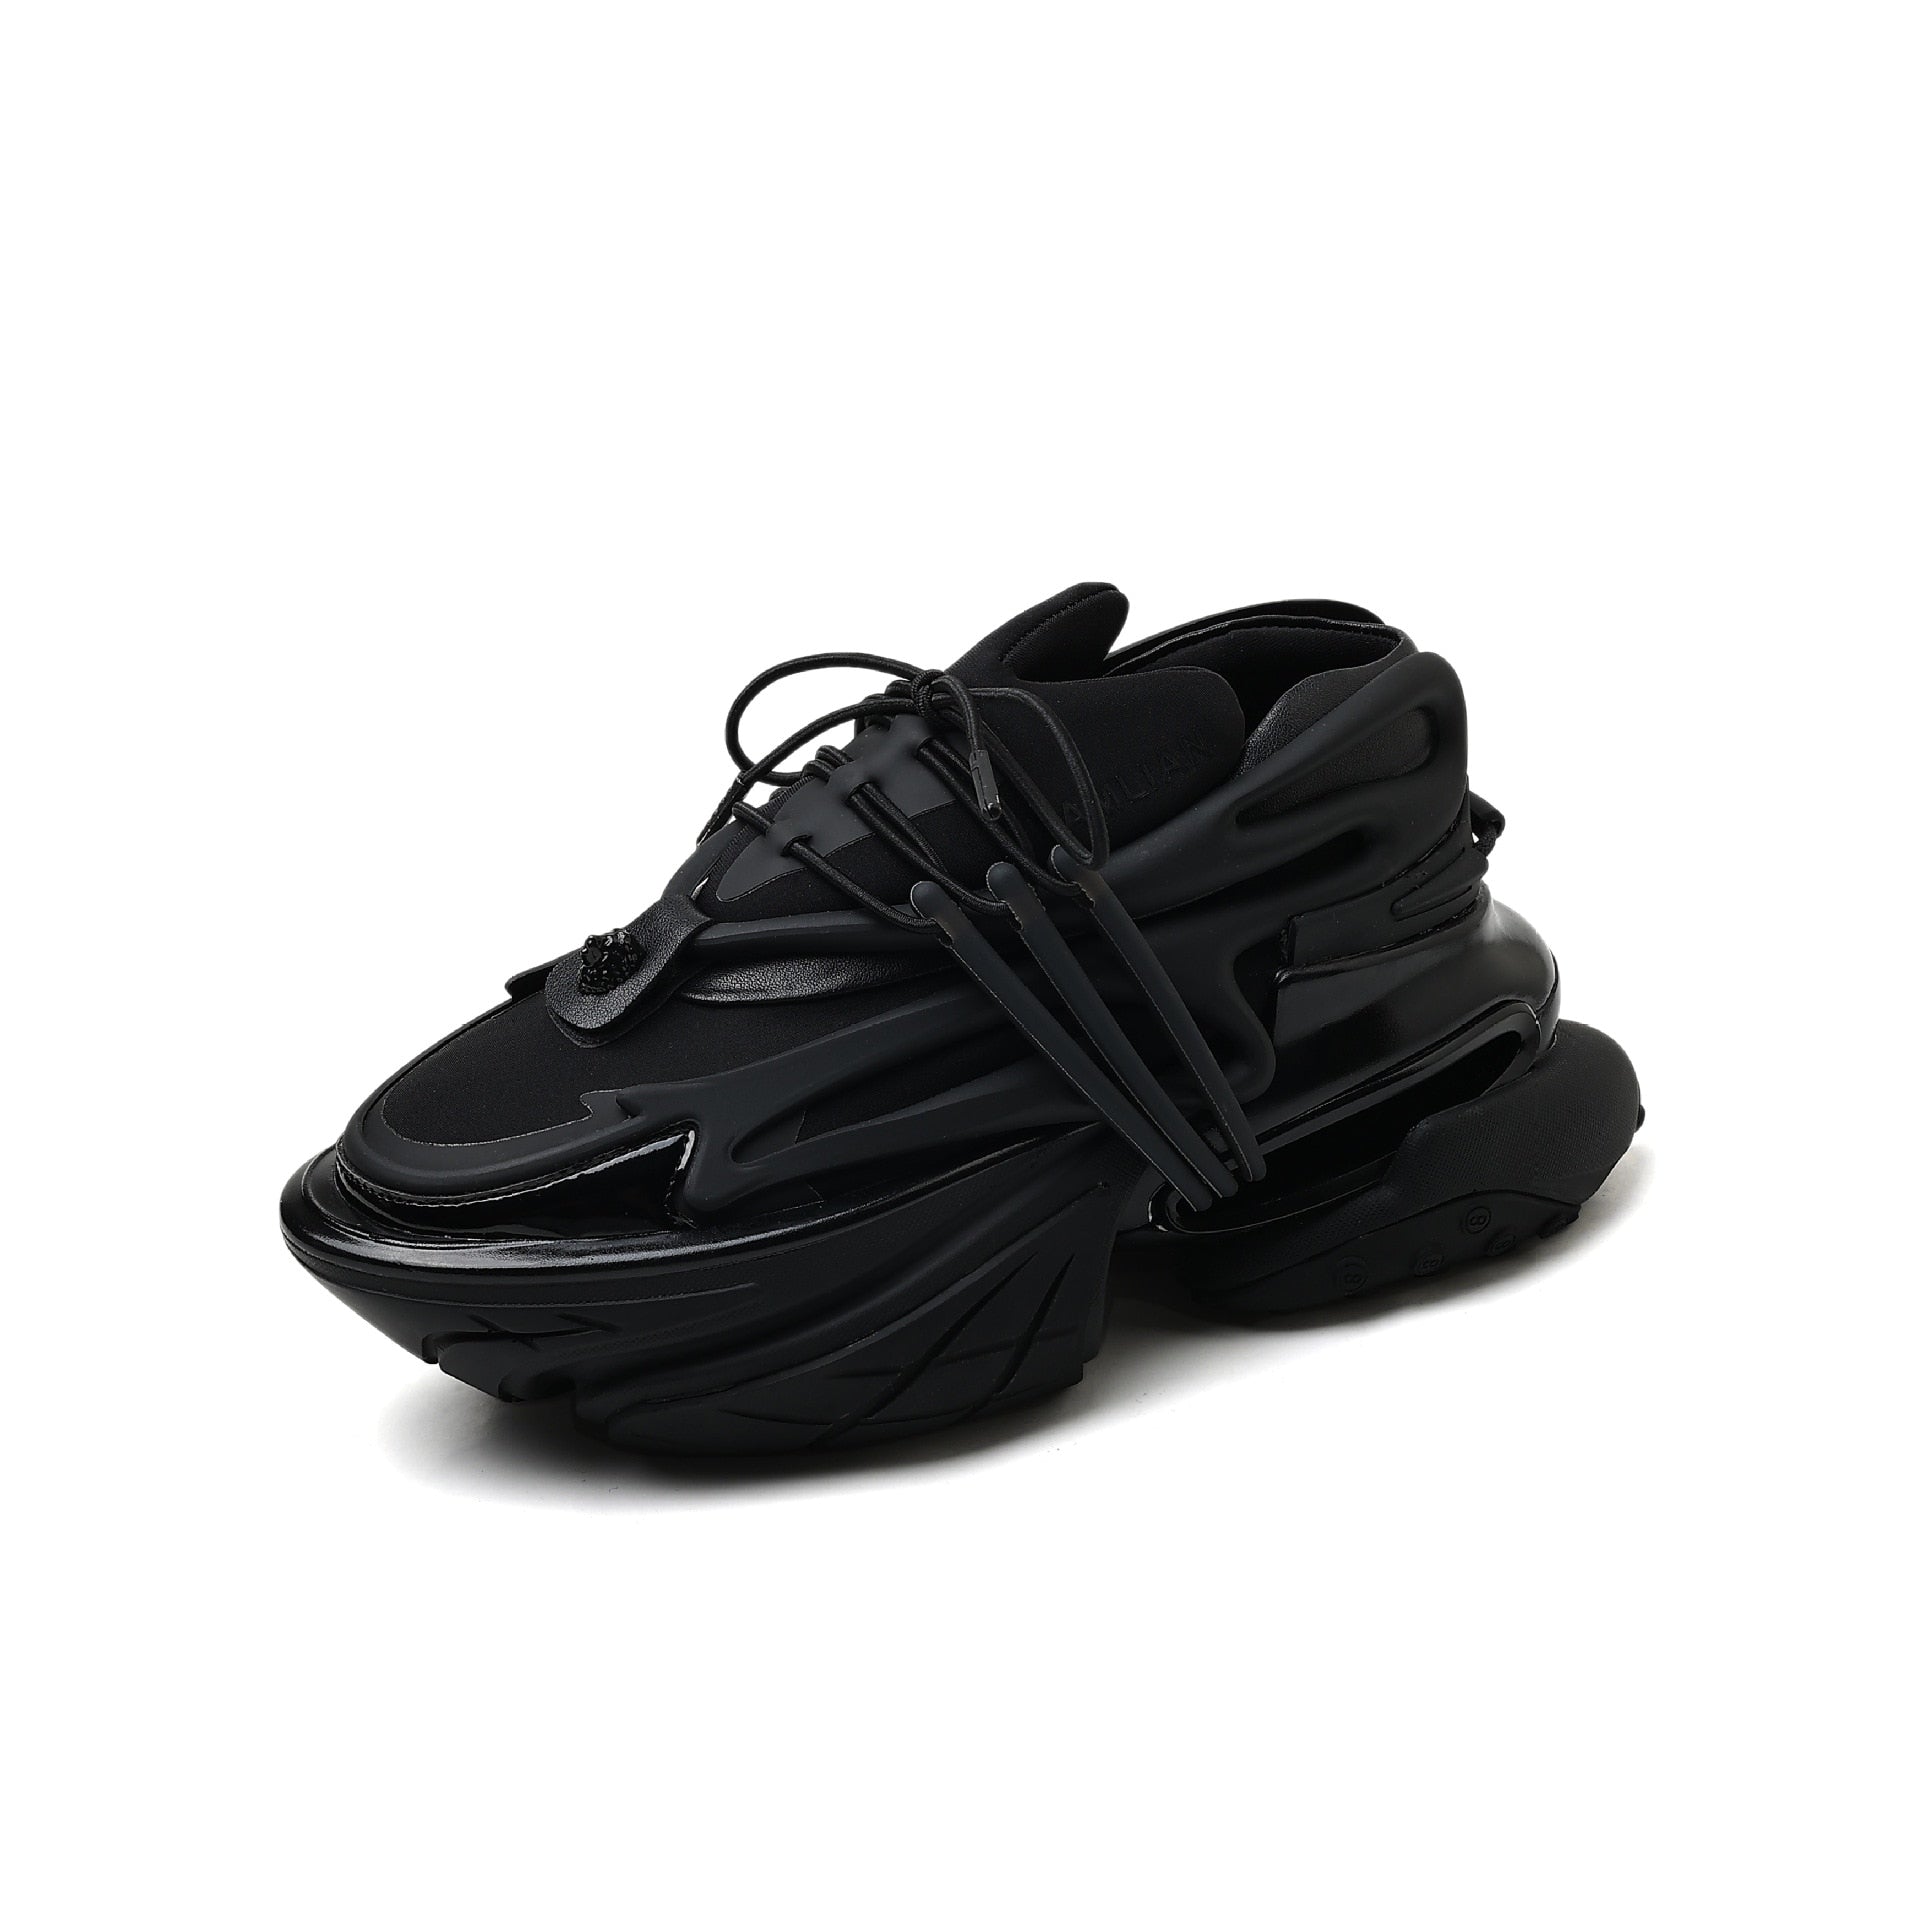 Spaceship Comfortable Airbag Shoes - Black / 35